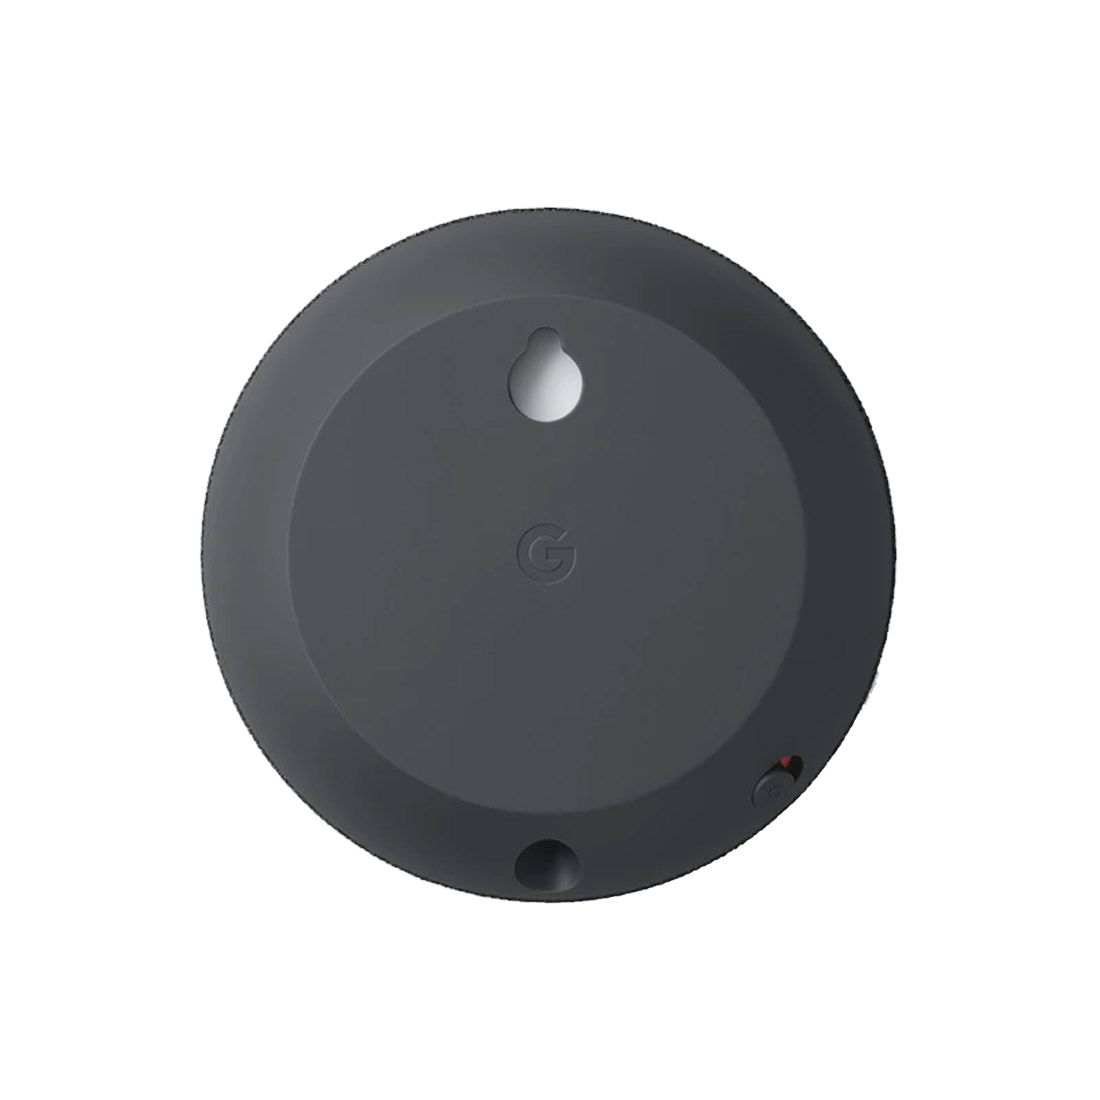 Google Nest Mini (Charcoal) - 2nd Generation